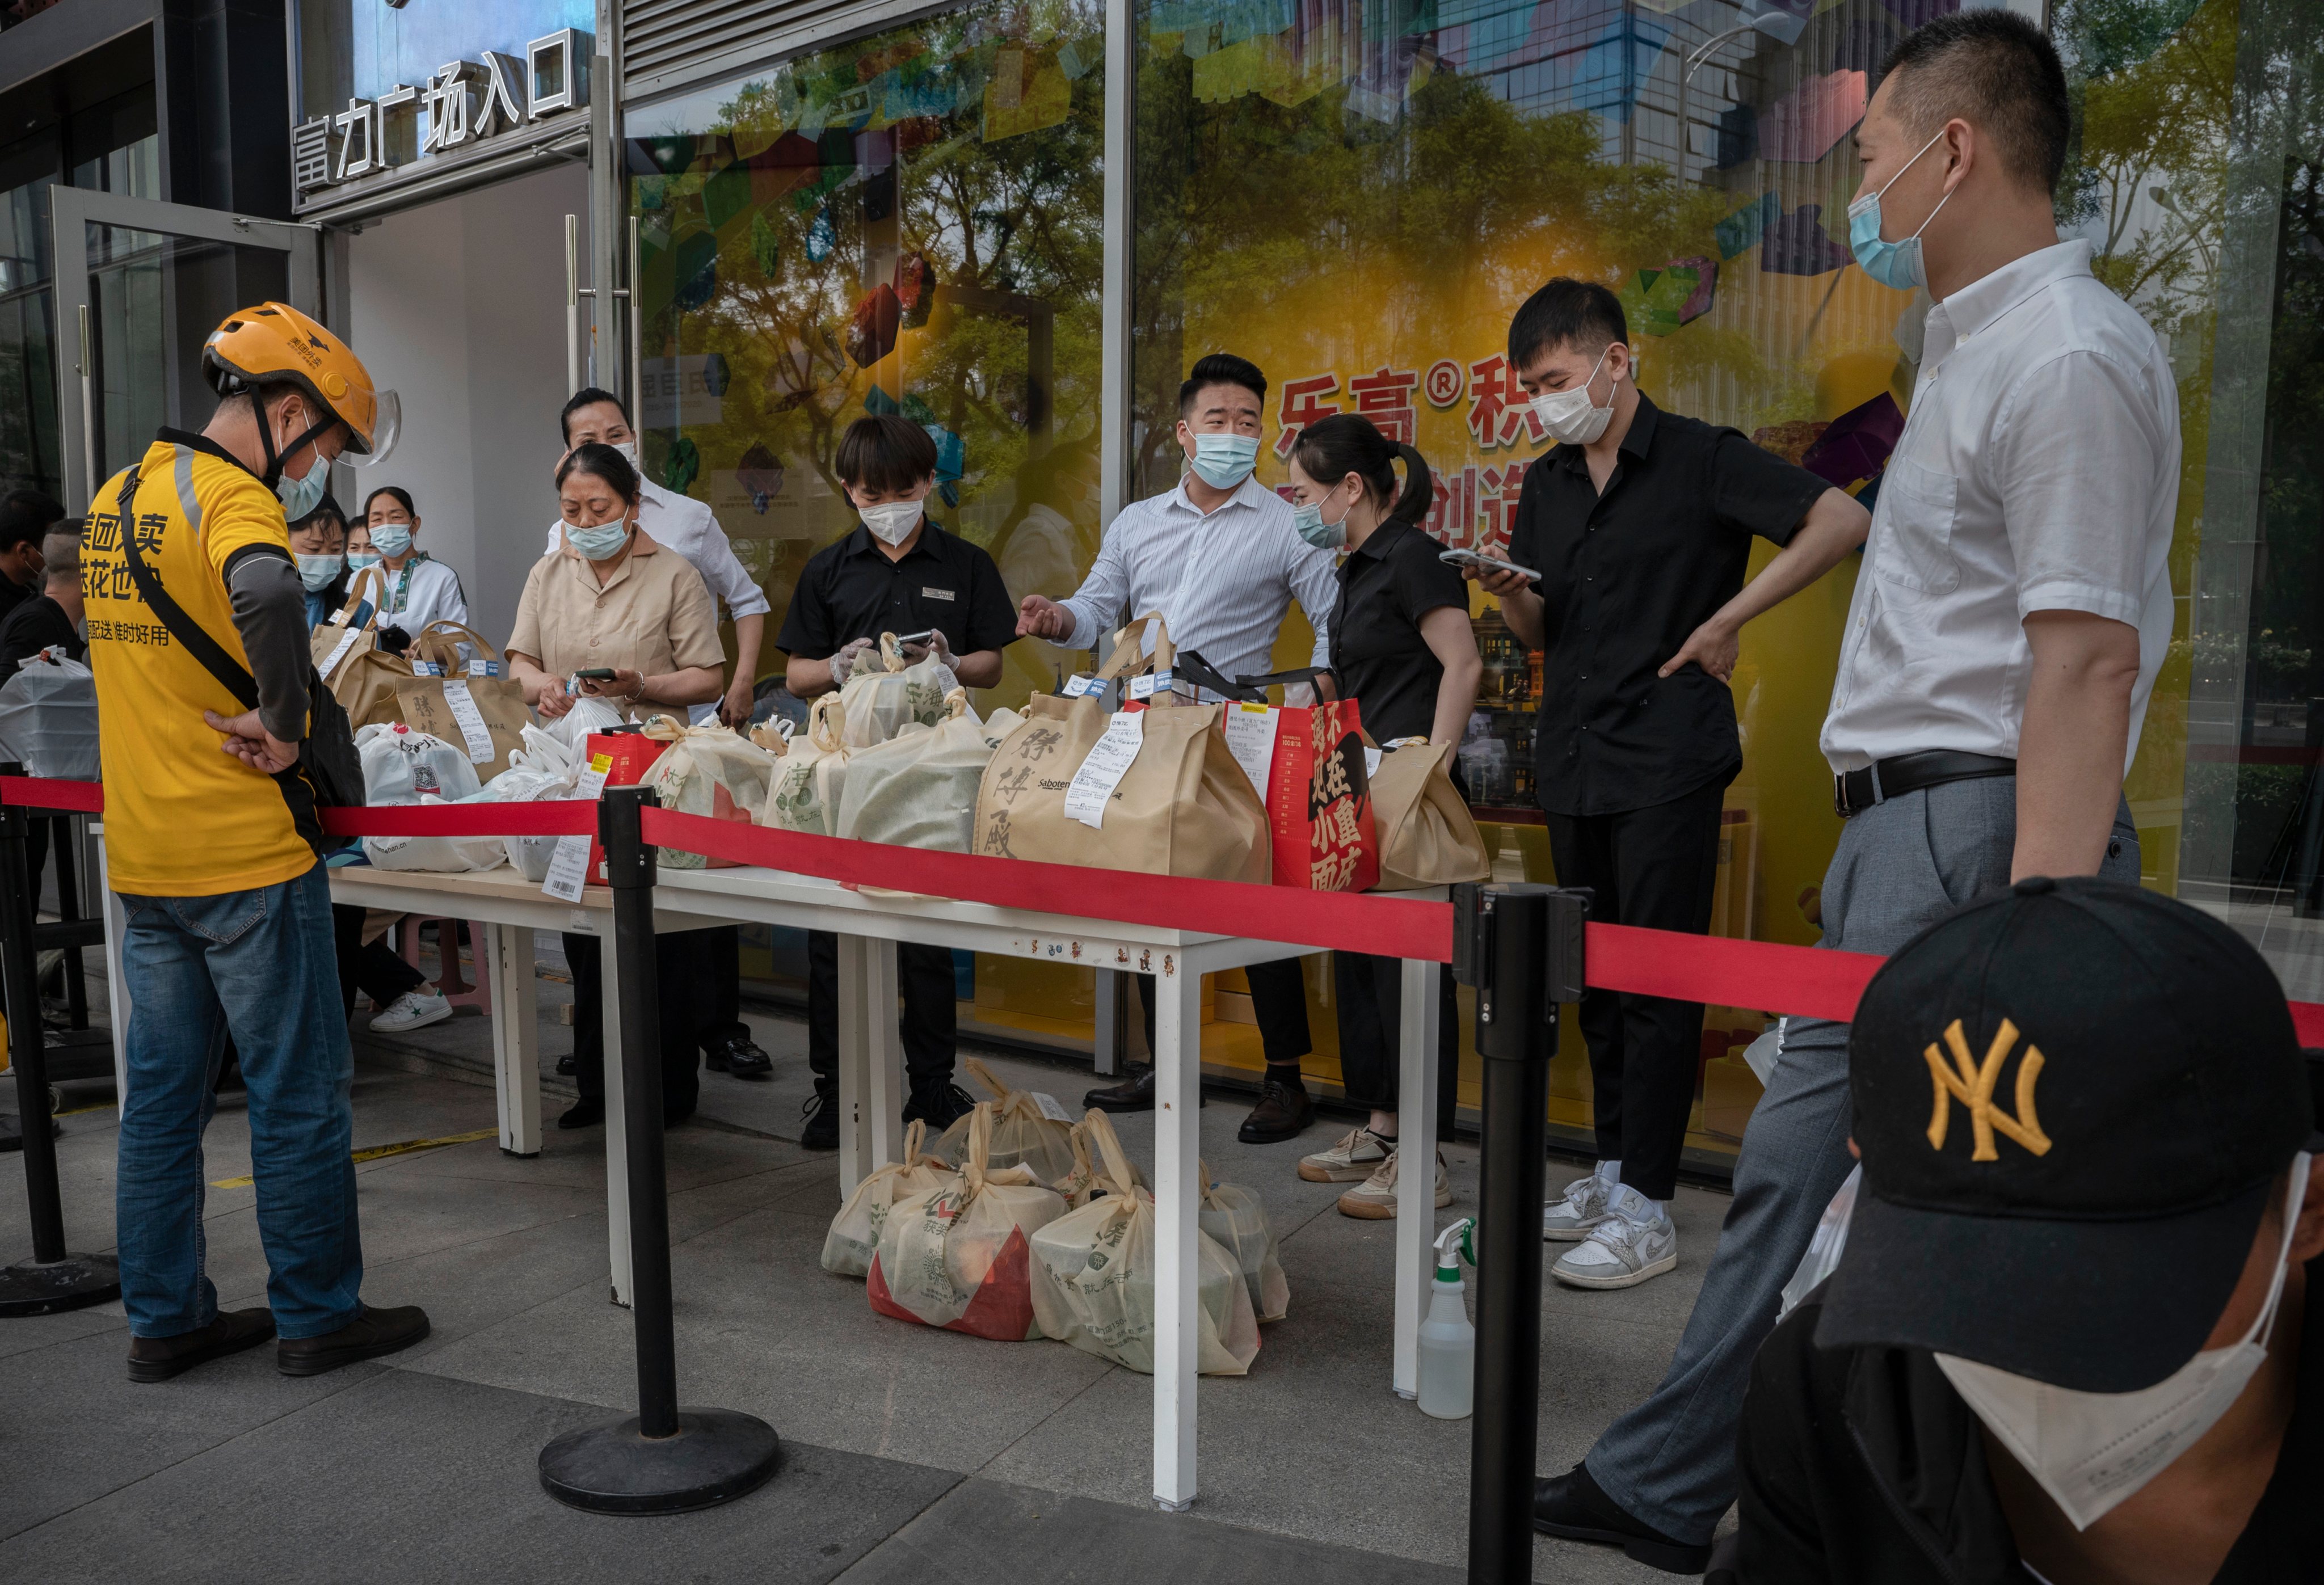 Beijing Tightens Measures After Recent COVID Outbreak